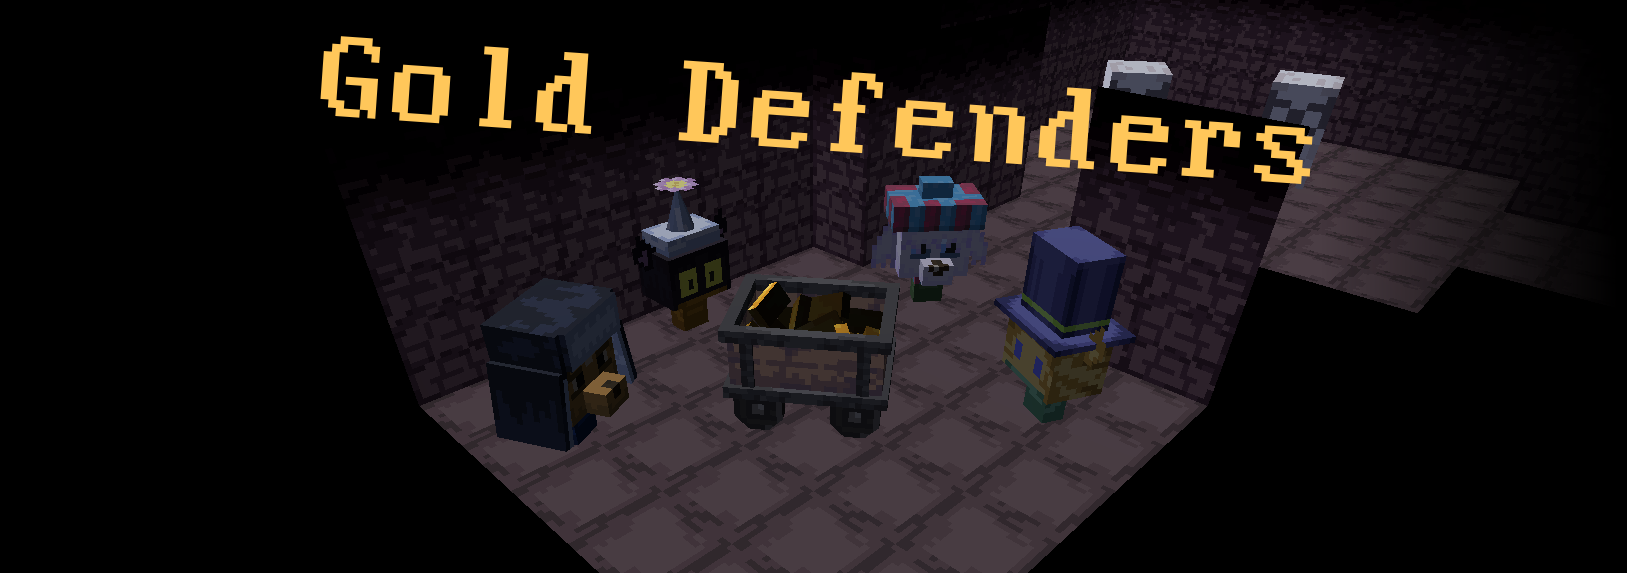 Gold Defenders